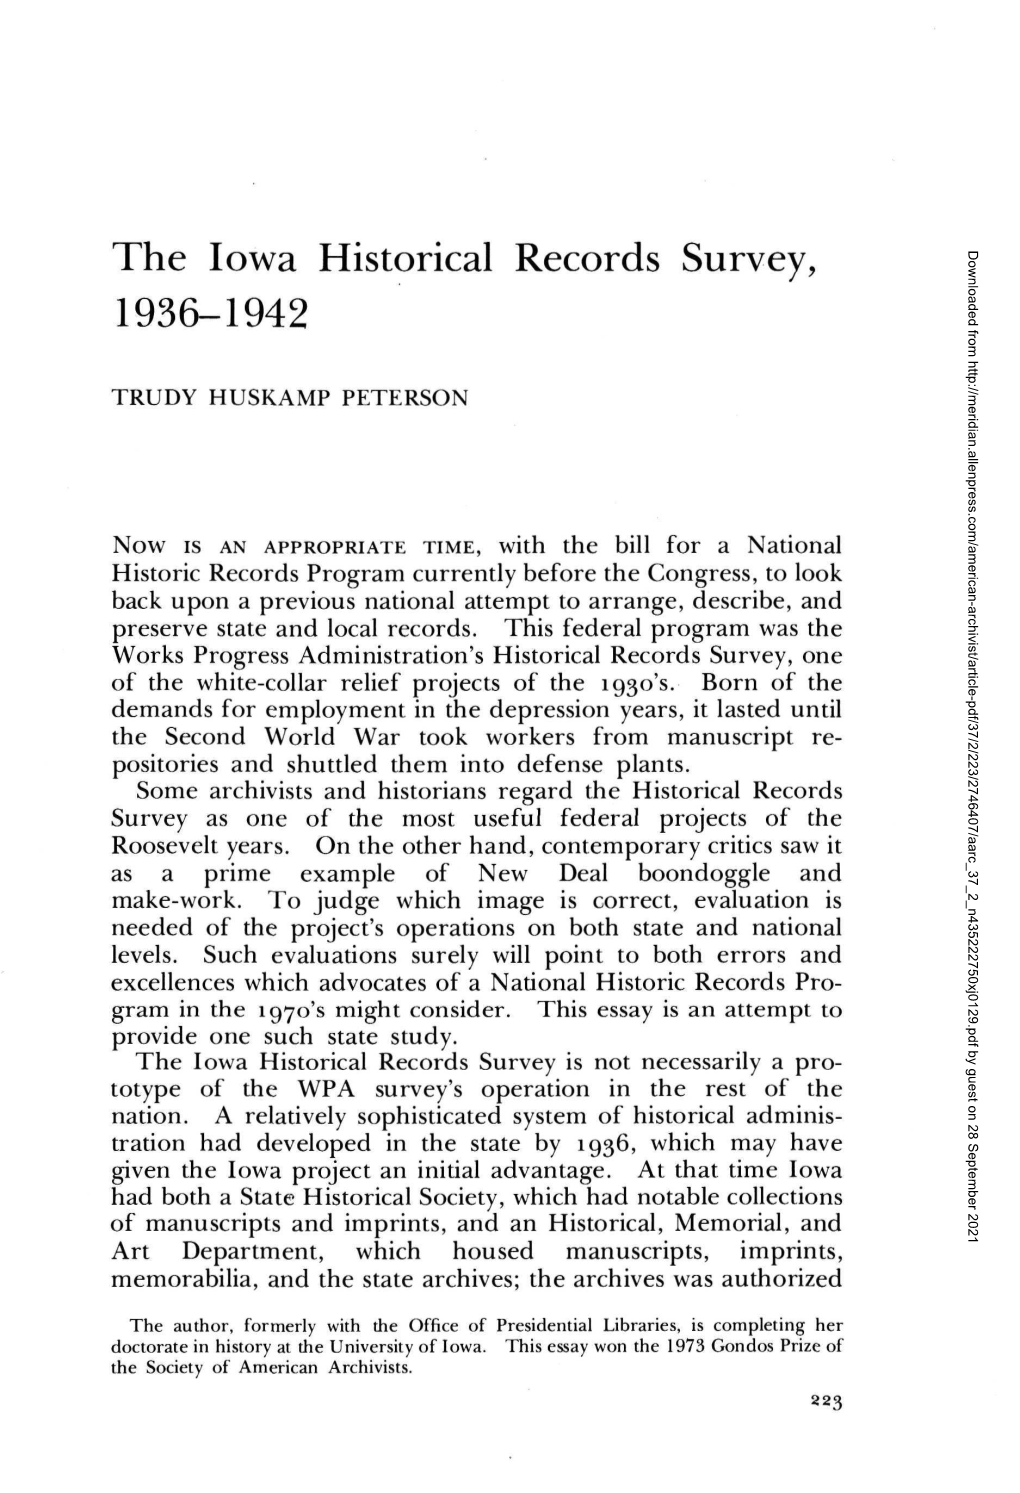 The Iowa Historical Records Survey, 1936-1942